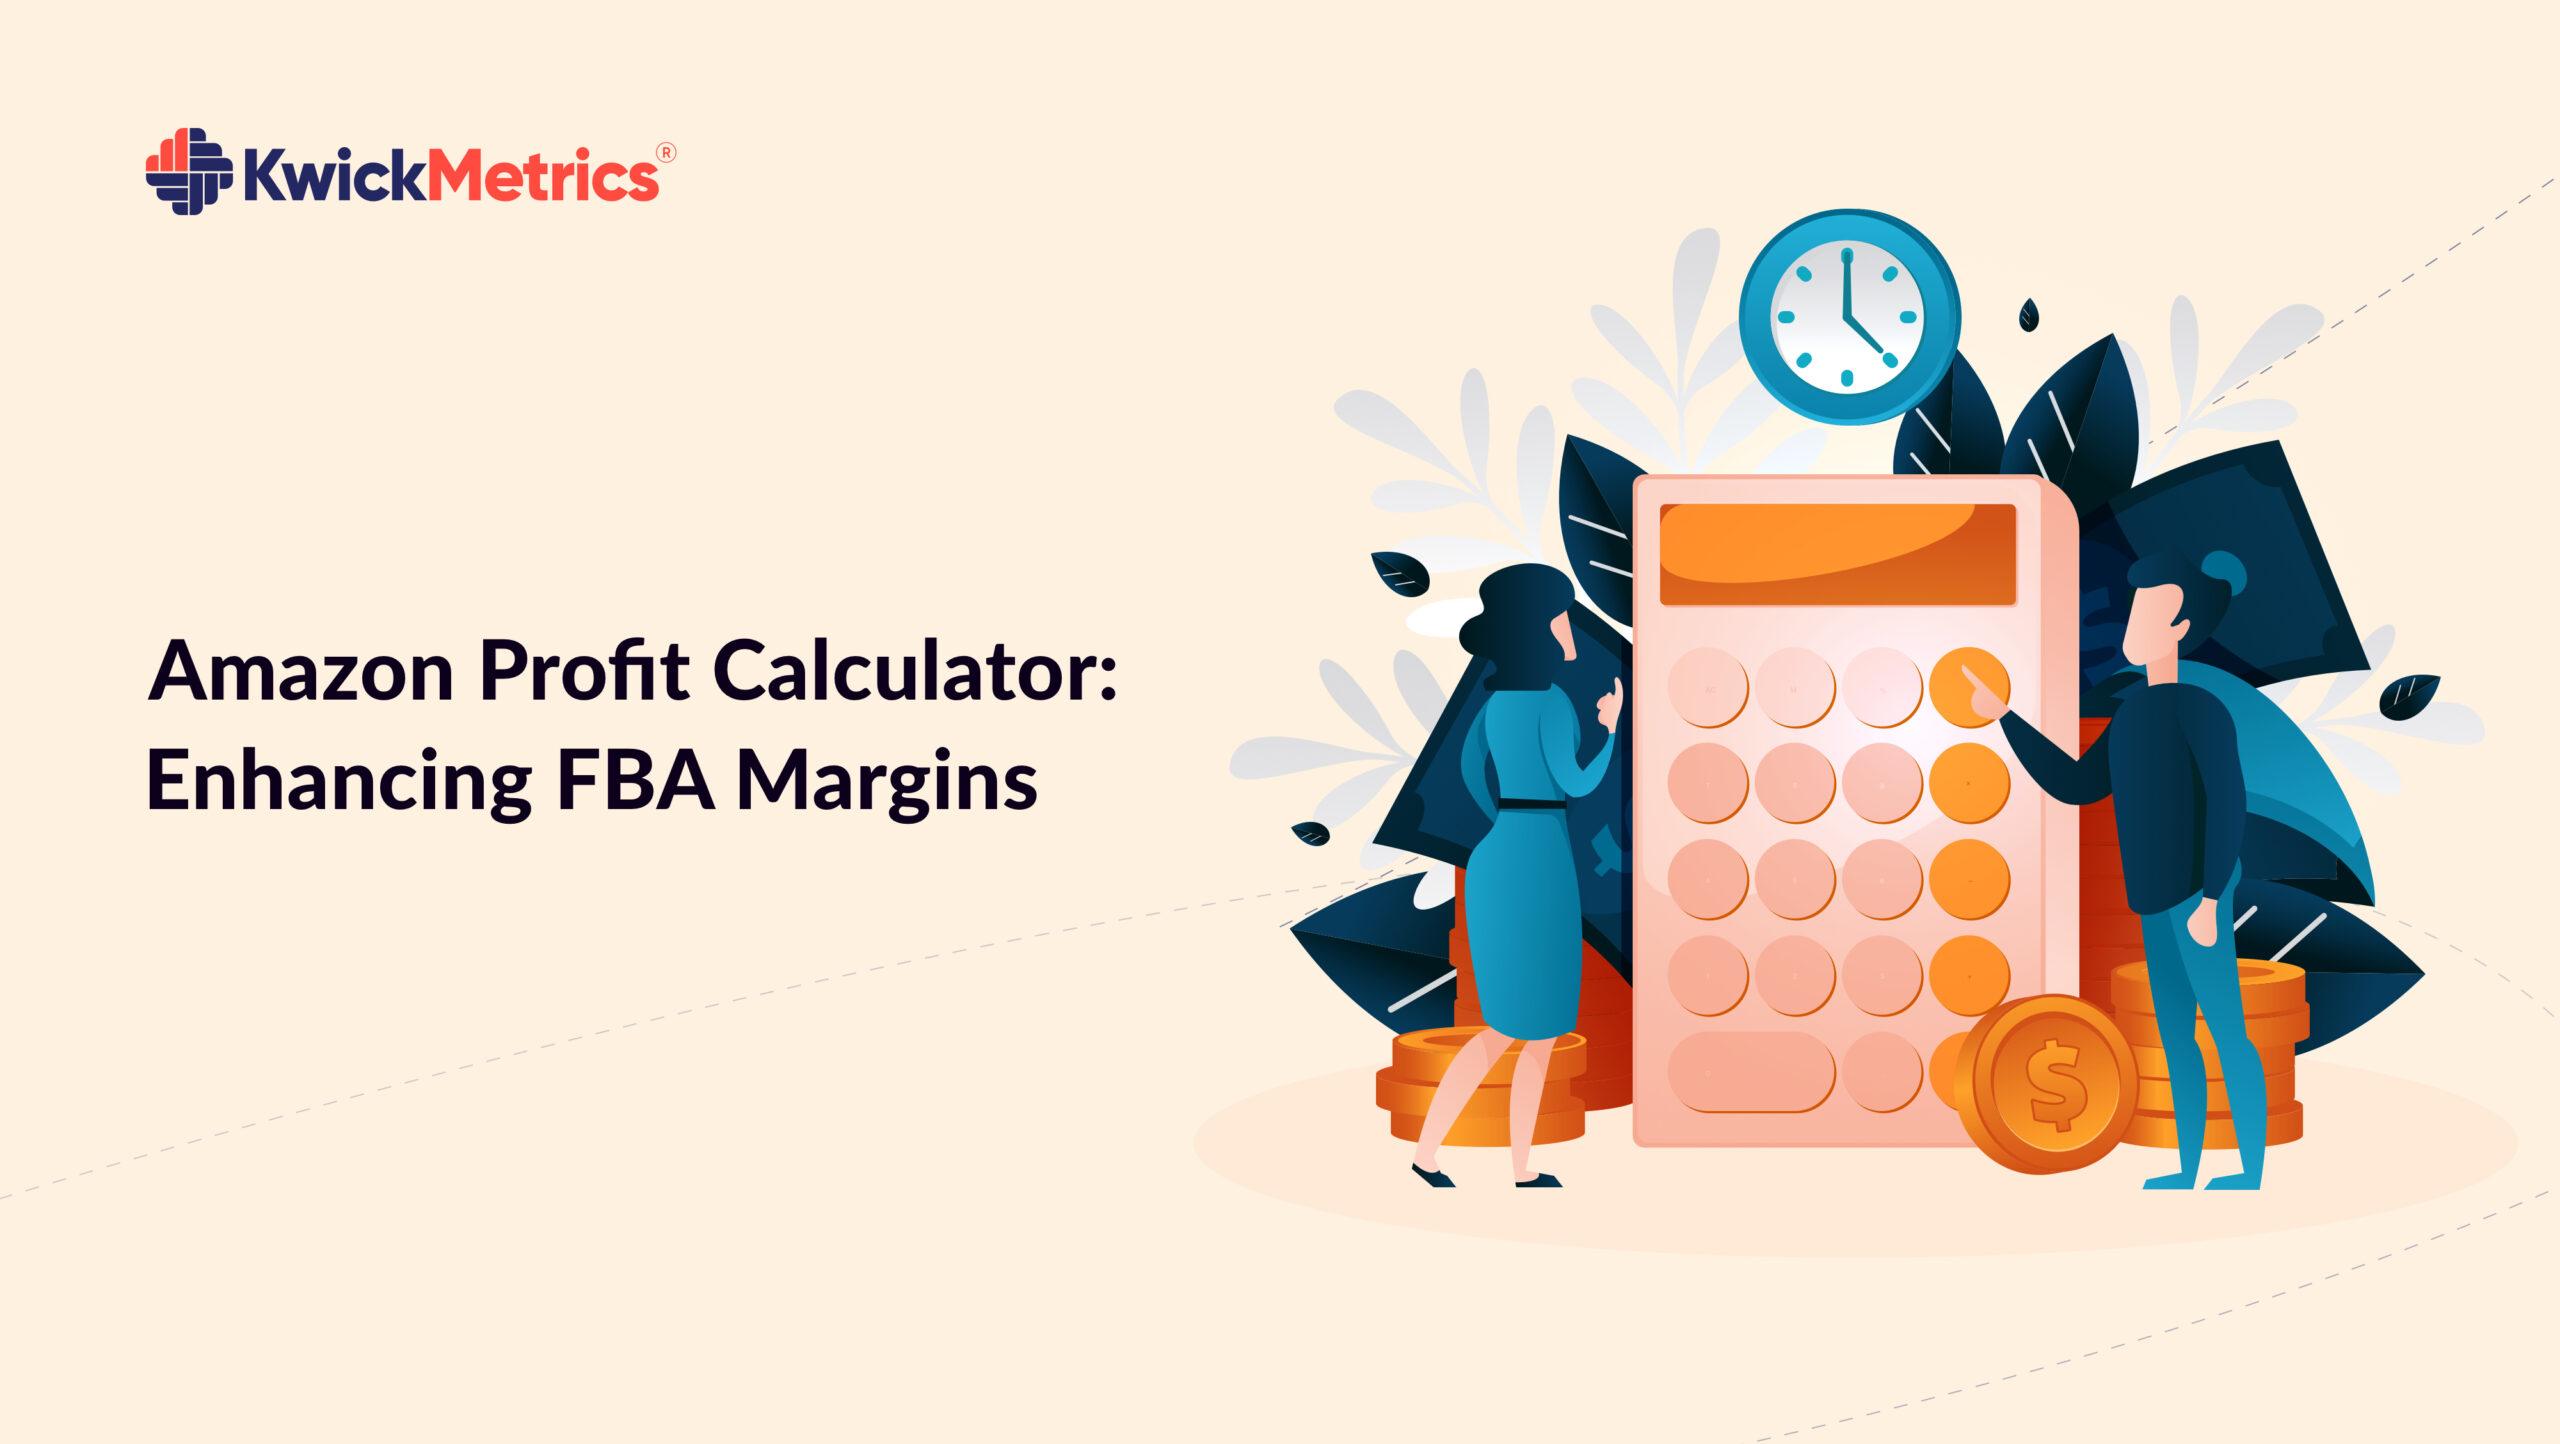 Amazon Profit Calculator: Enhancing FBA Margins